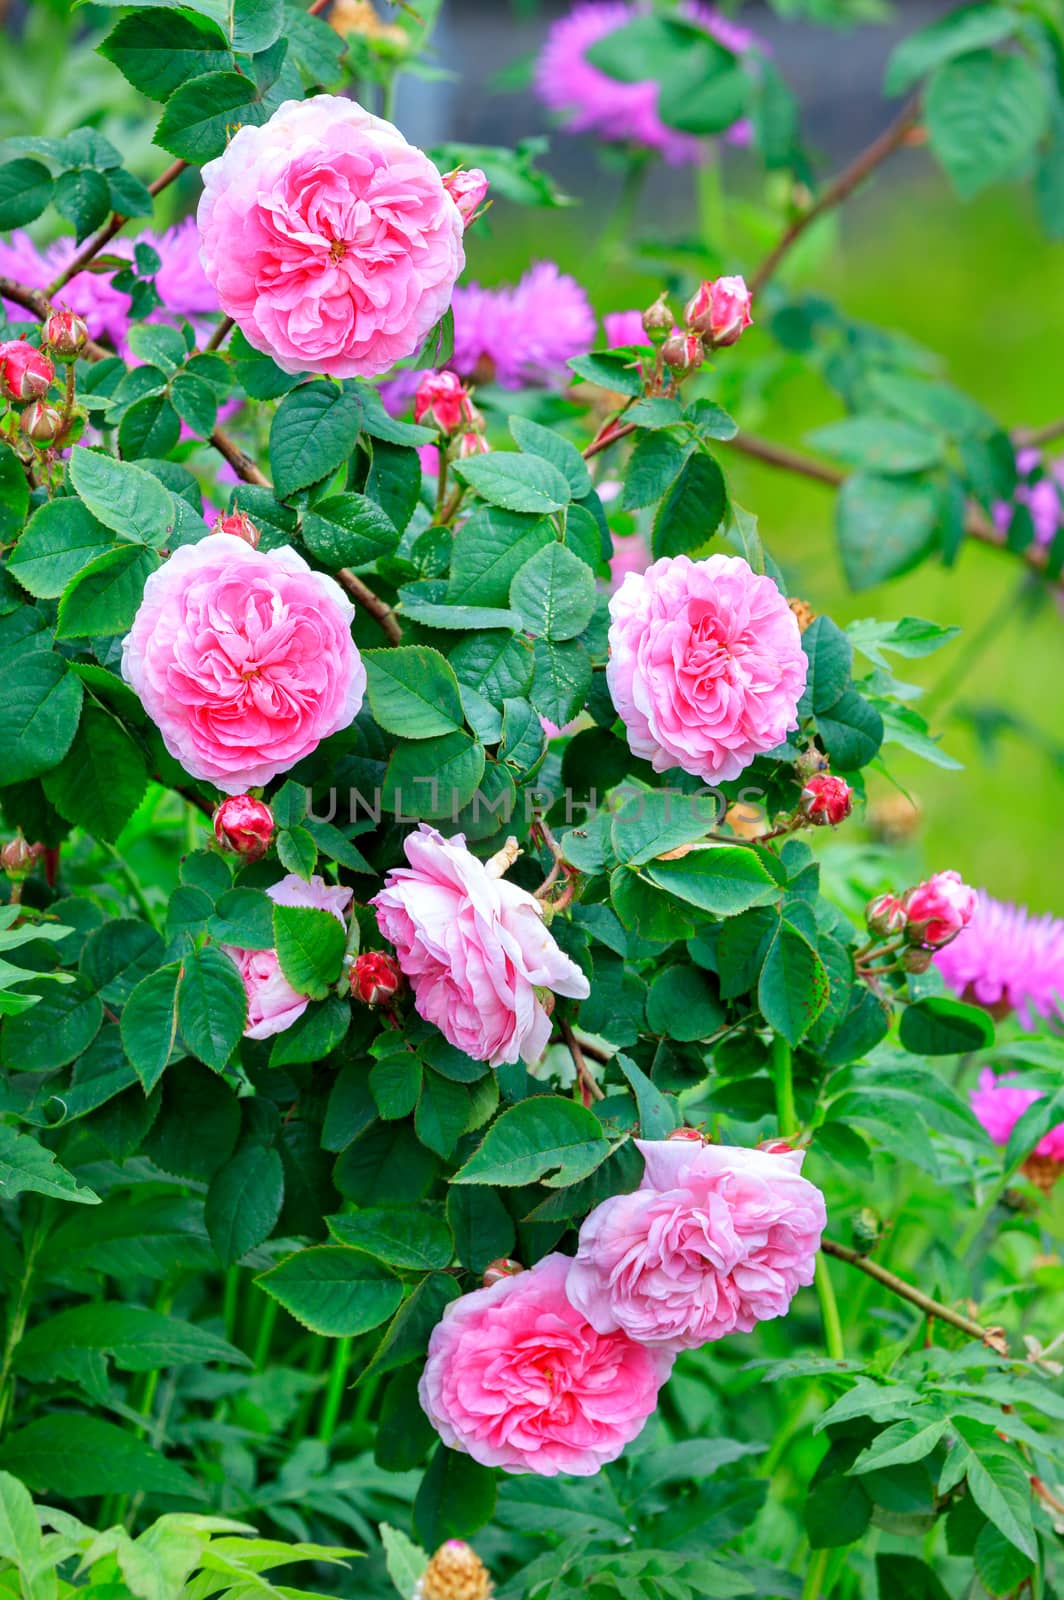 Blooming tea rose bush in the garden. by Sergii